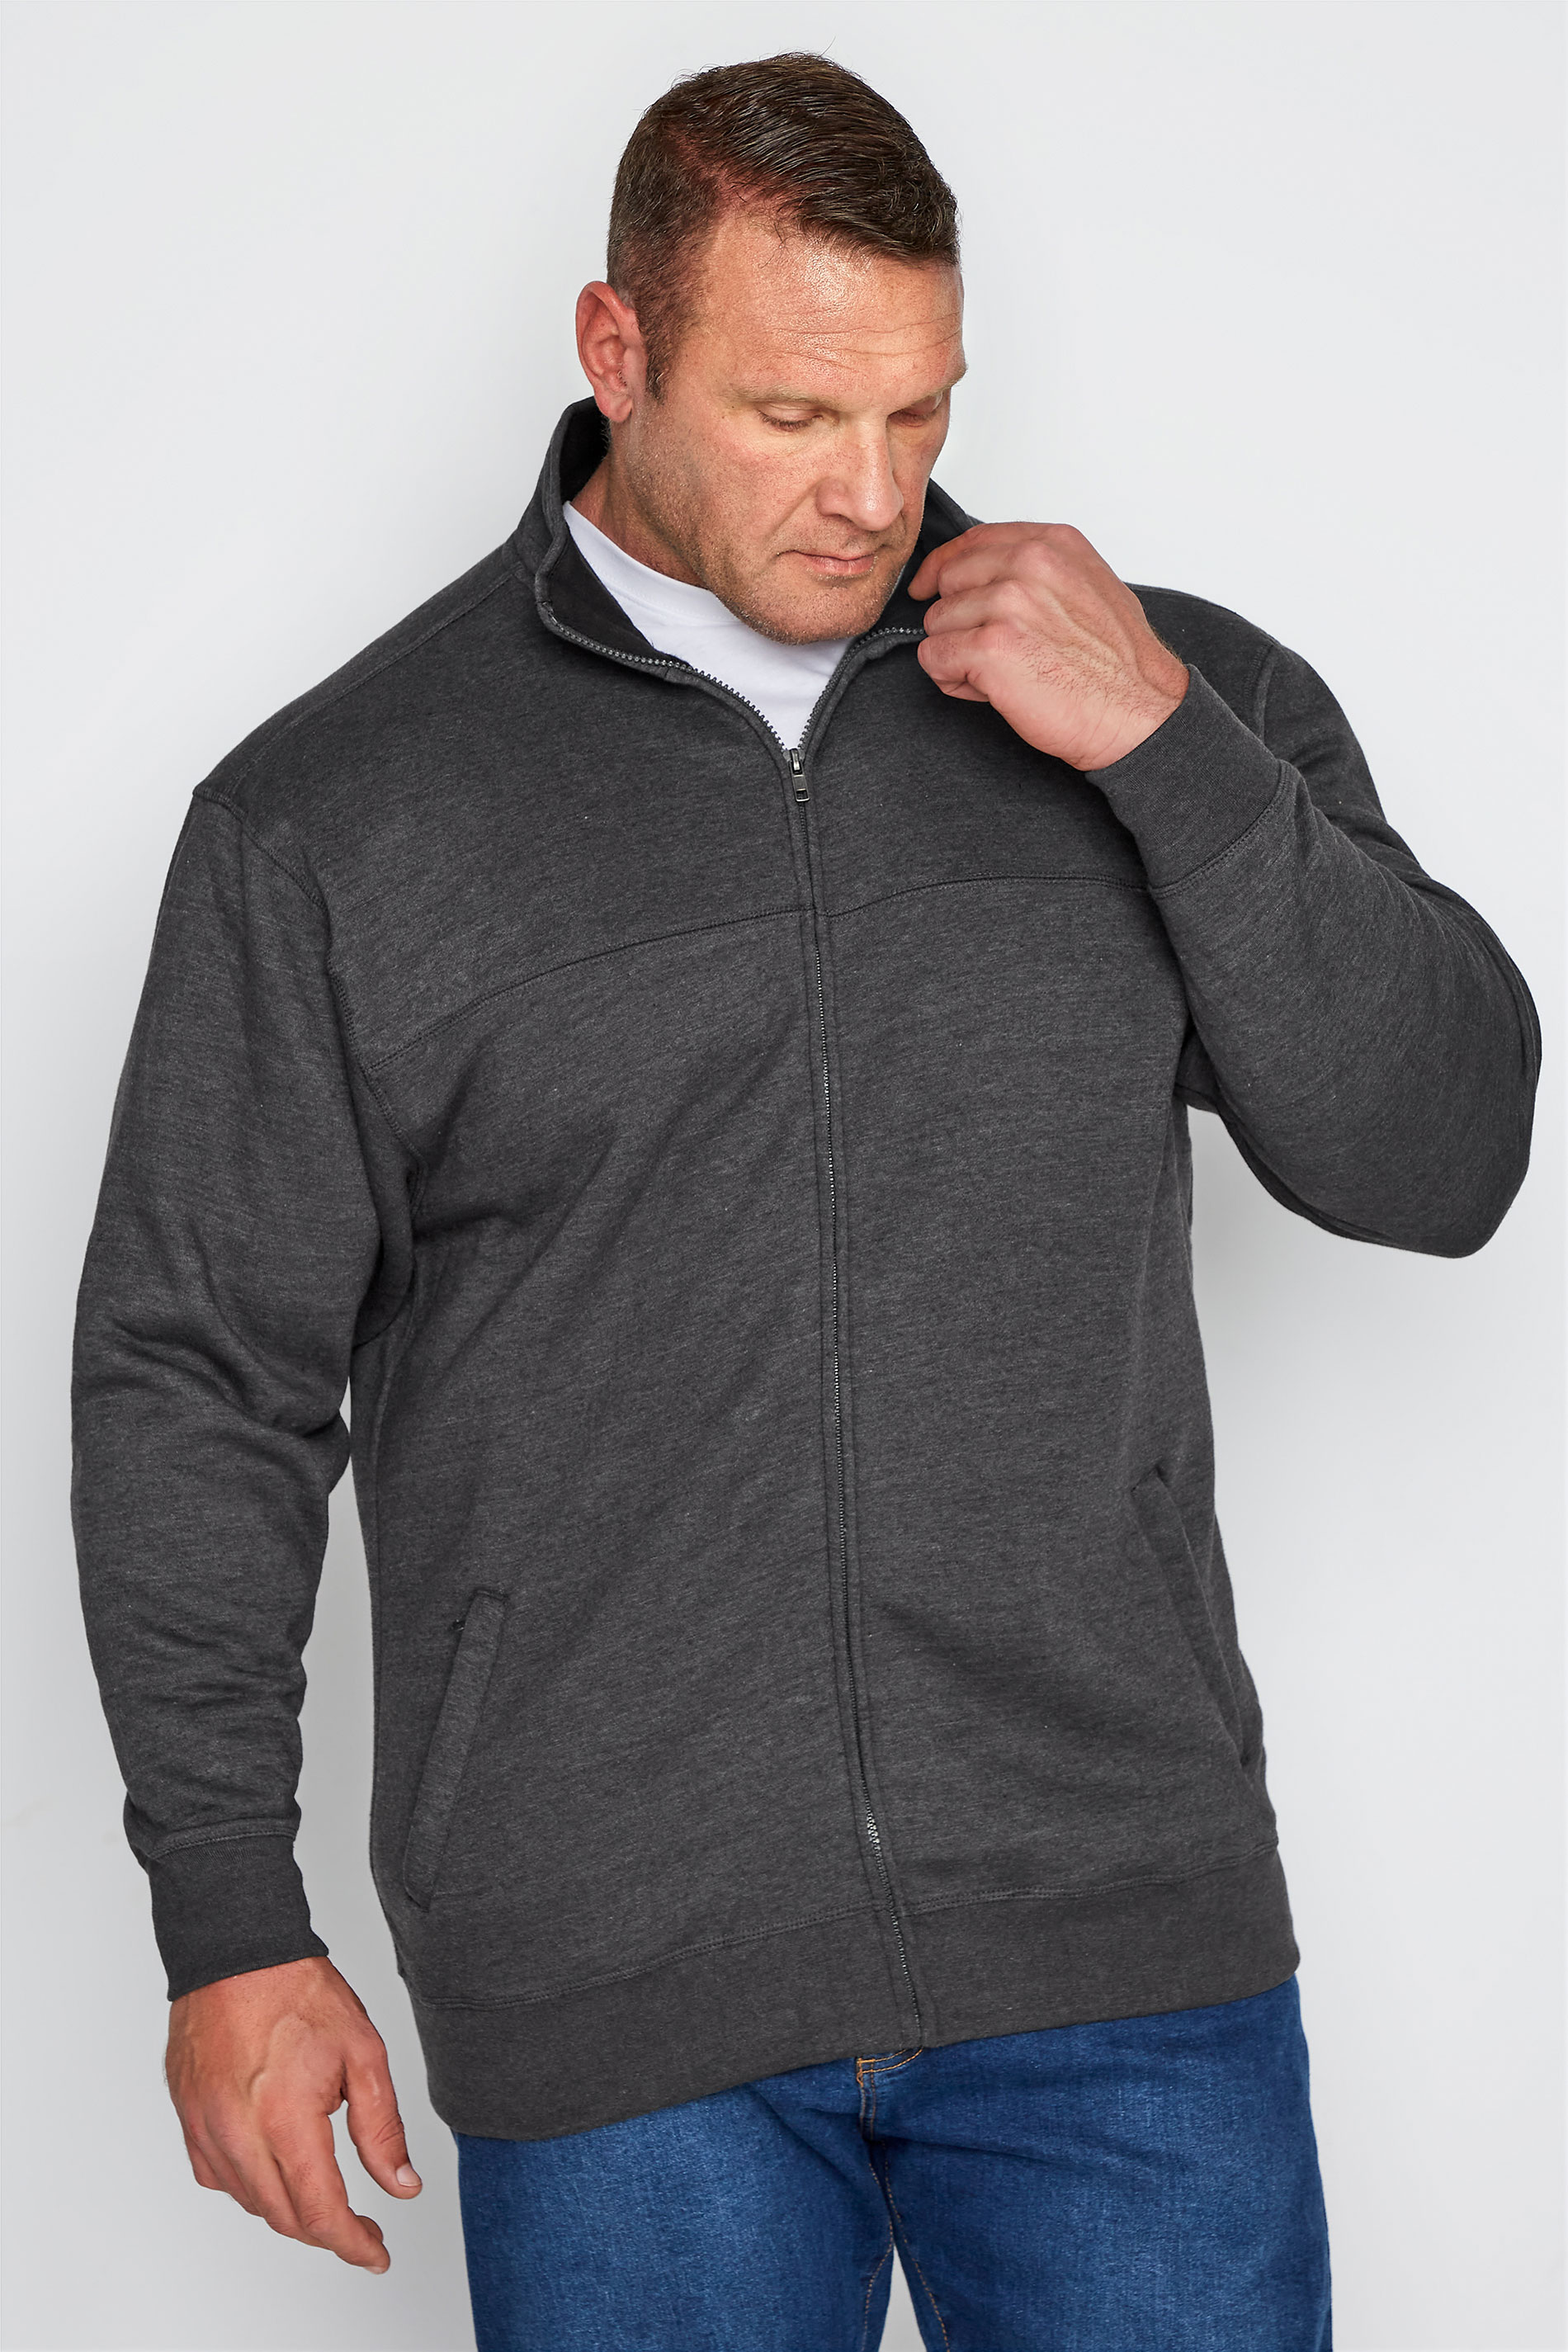 KAM Charcoal Grey Zip Through Sweatshirt_A.jpg